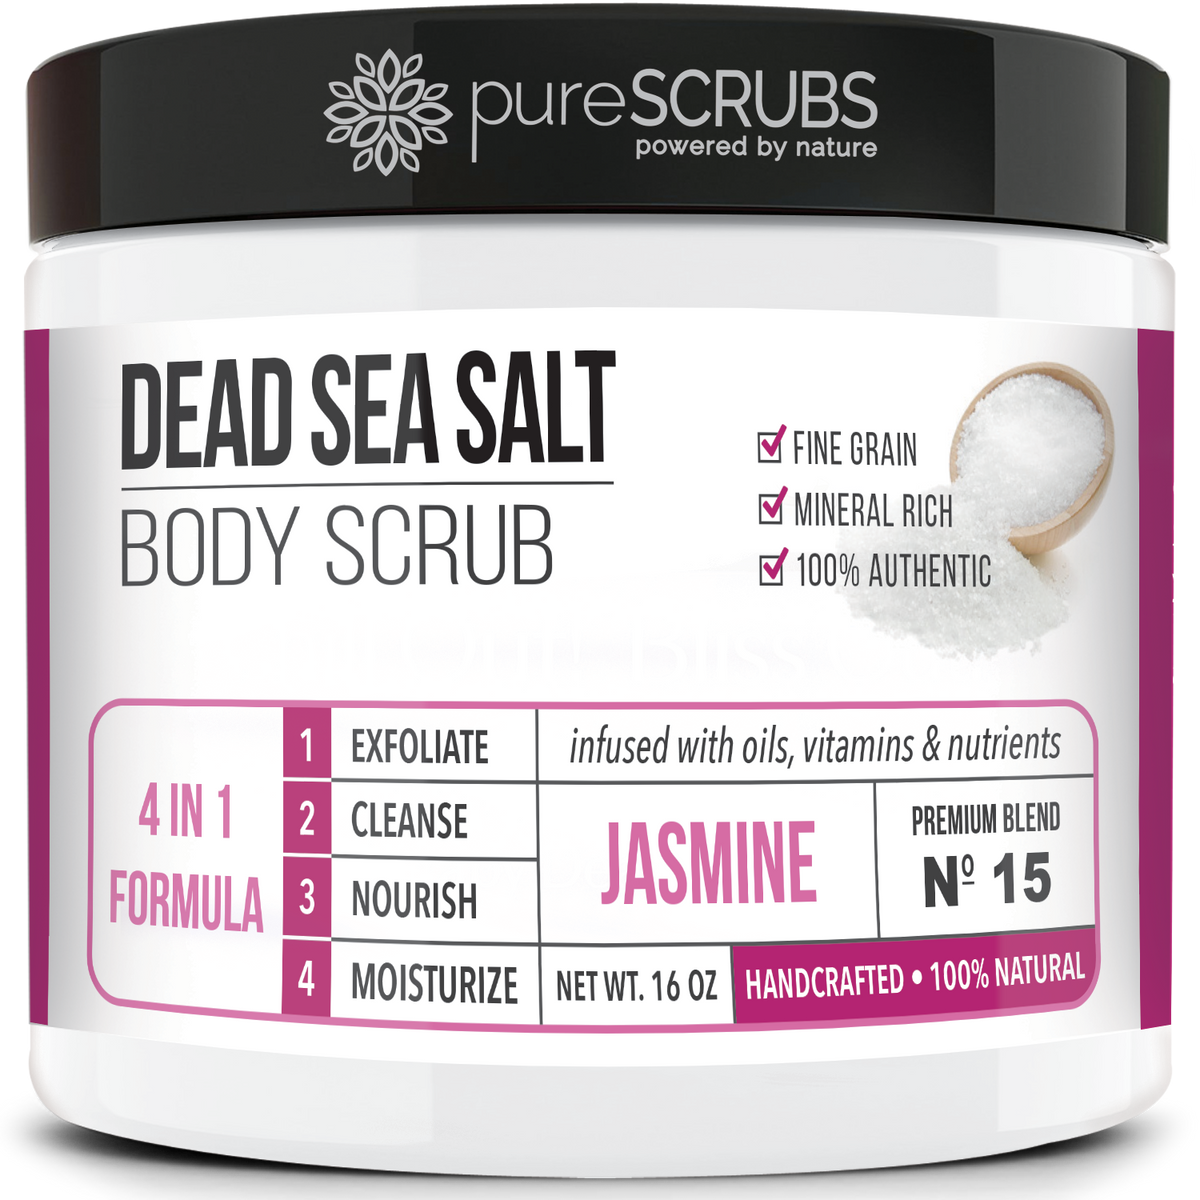 Jasmine Body Scrub / Dead Sea Salt / Premium Blend #15